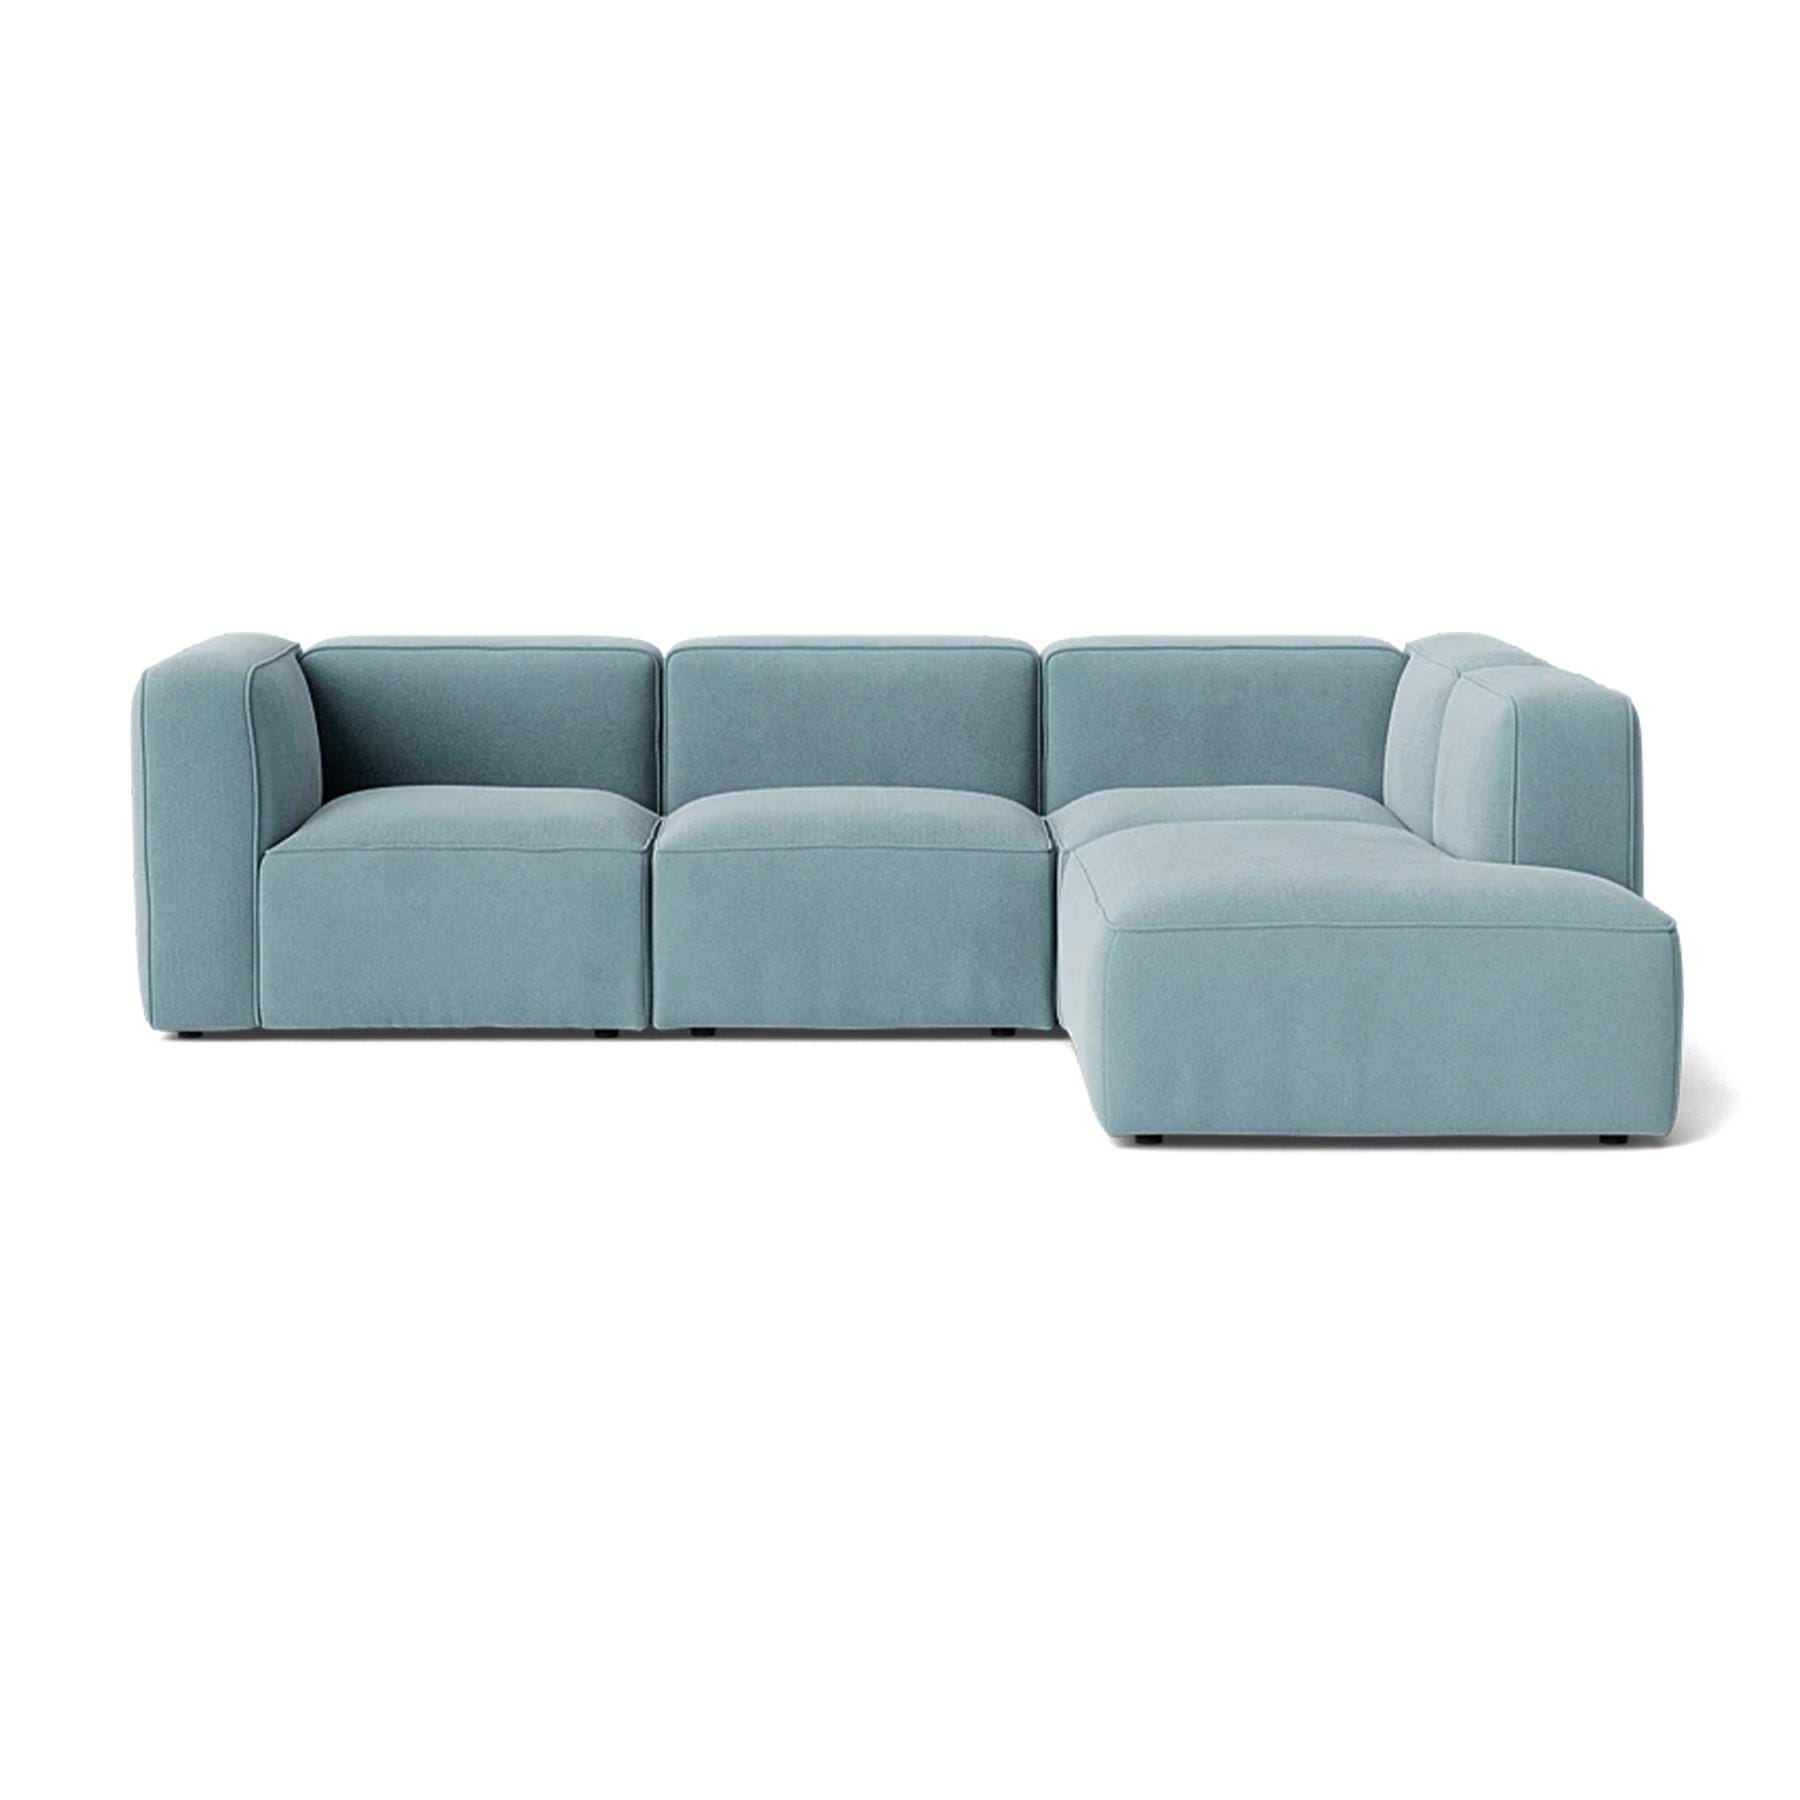 Make Nordic Basecamp Small Family Sofa Nordic Velvet 150 Right Blue Designer Furniture From Holloways Of Ludlow